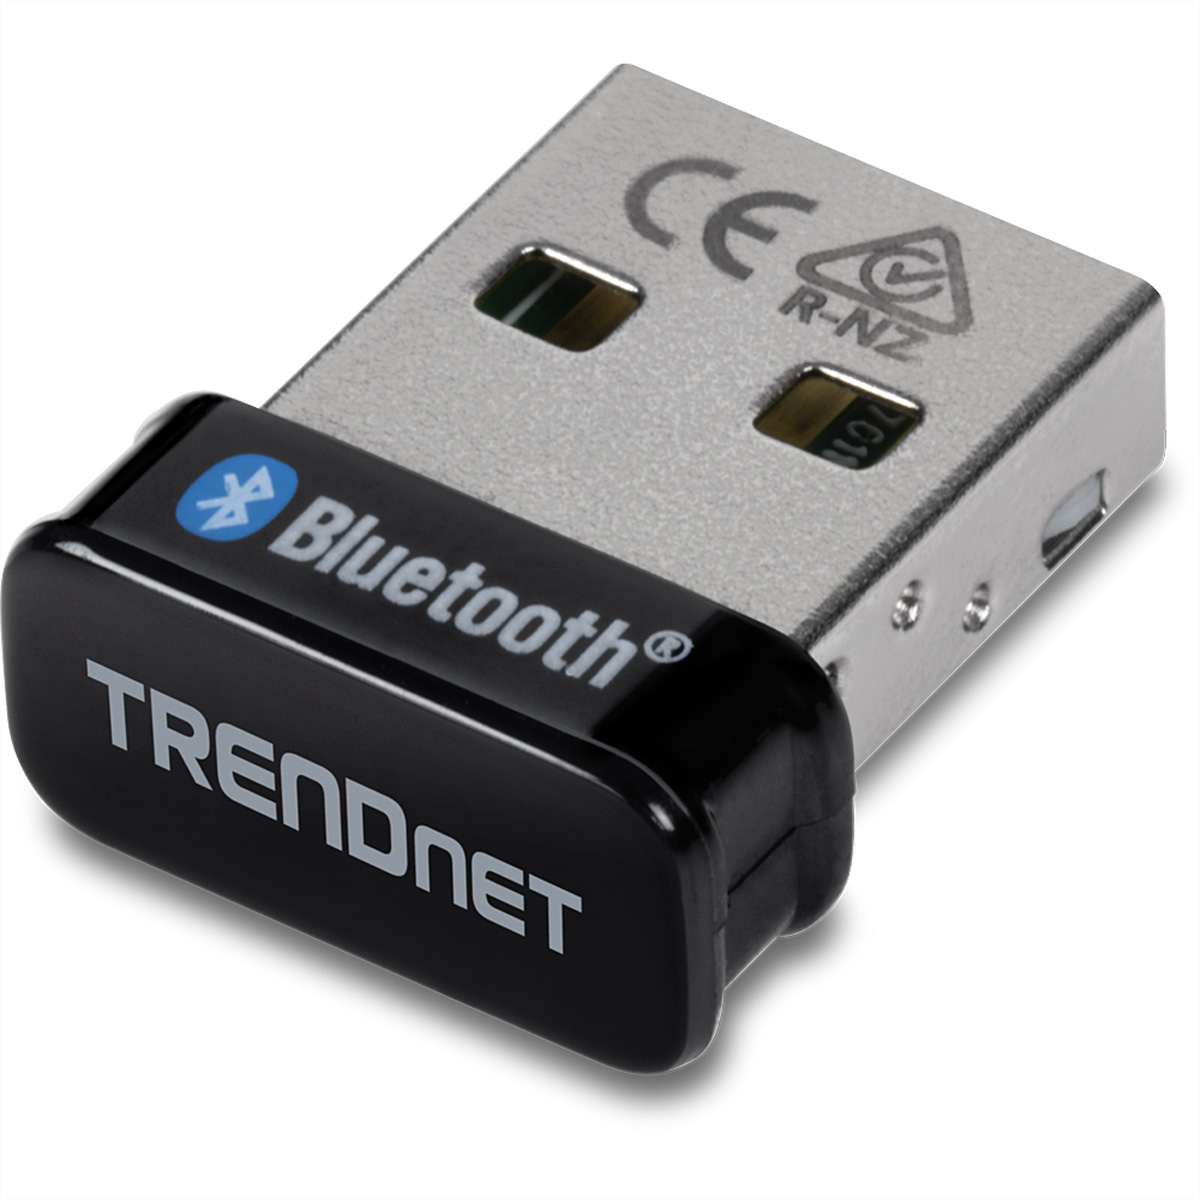 TRENDnet TBW-110UB Micro Bluetooth 5.0 USB Adapter